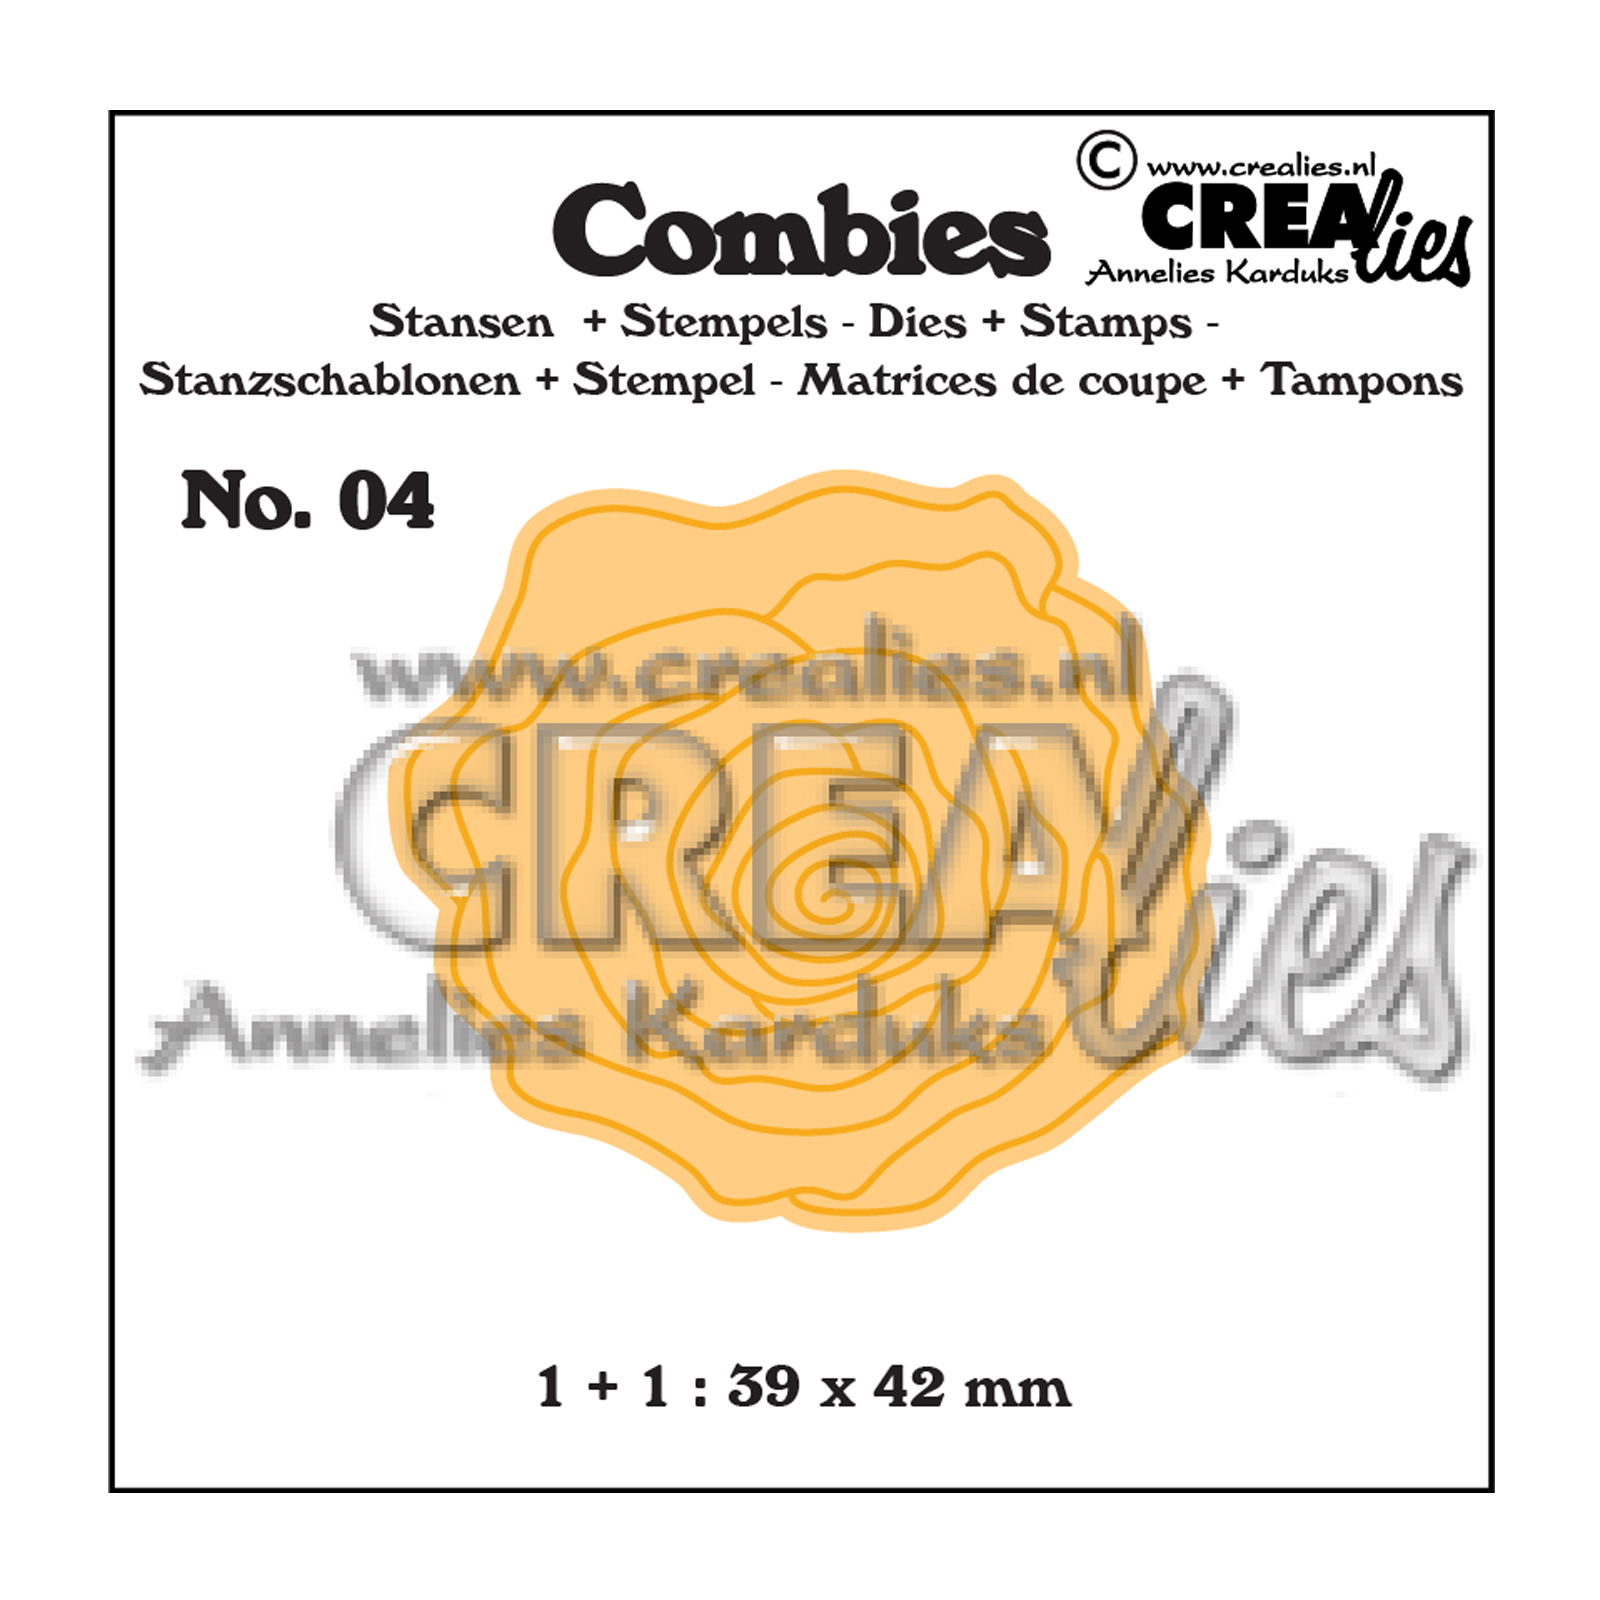 Crealies • Combies snijmal & stempel no.04 Roos